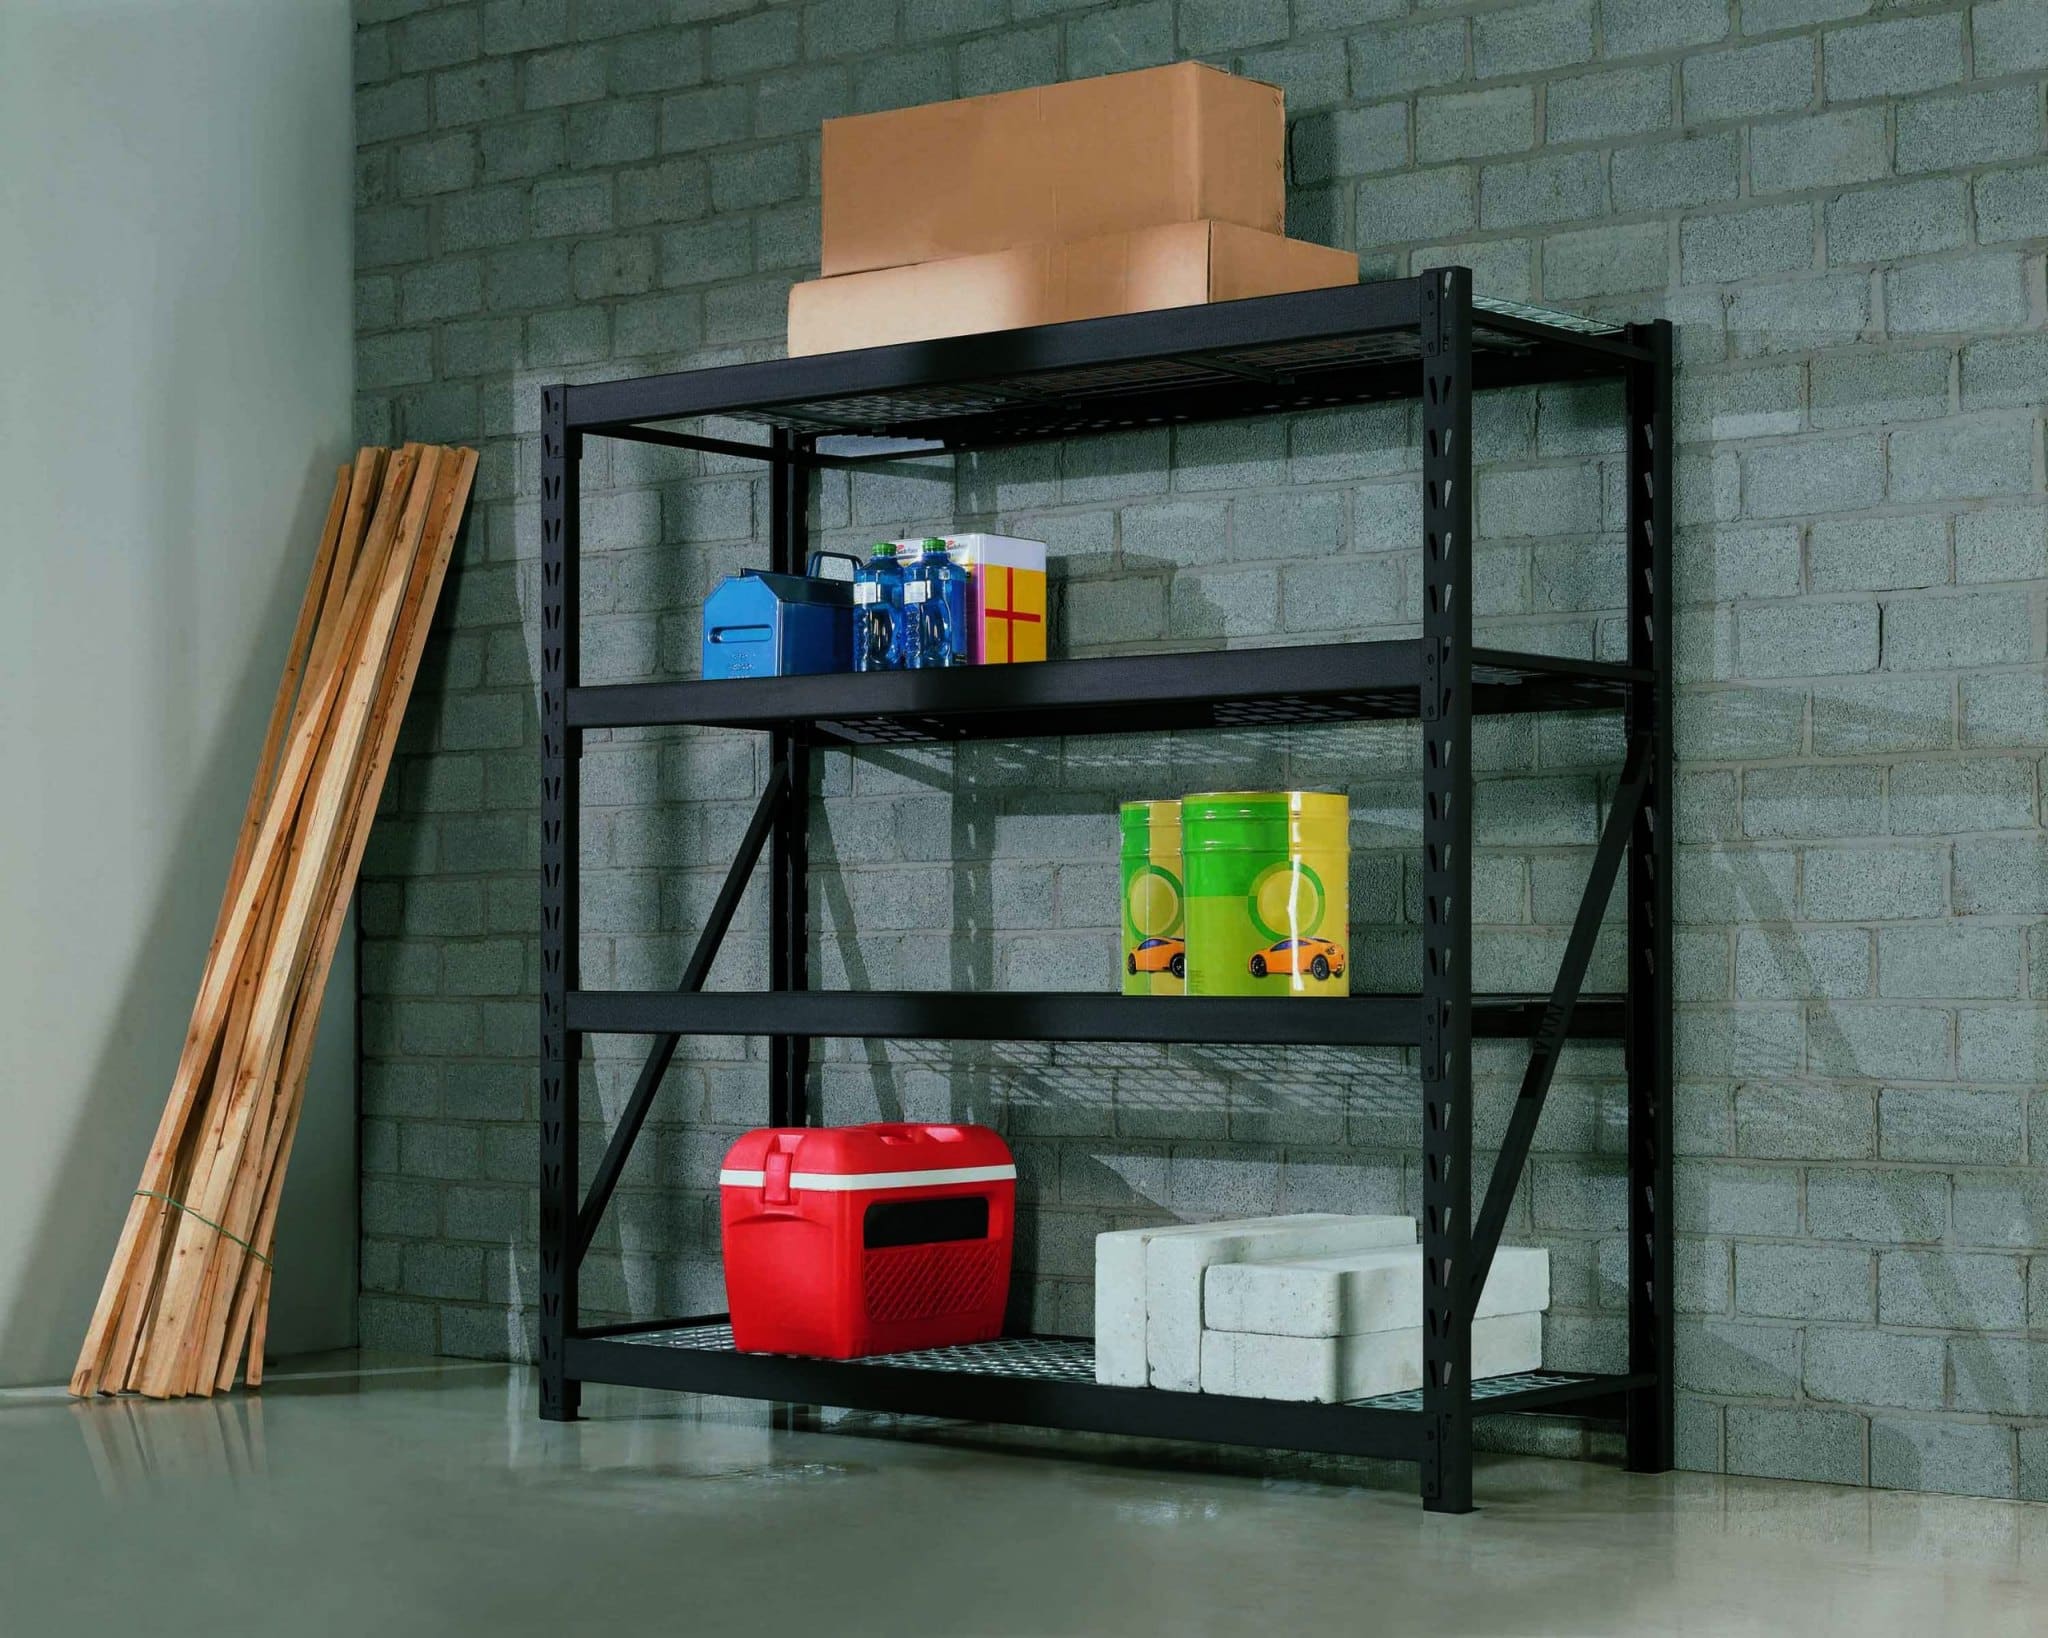 Whalen Shelving Unit Costco Garage Storage Racks